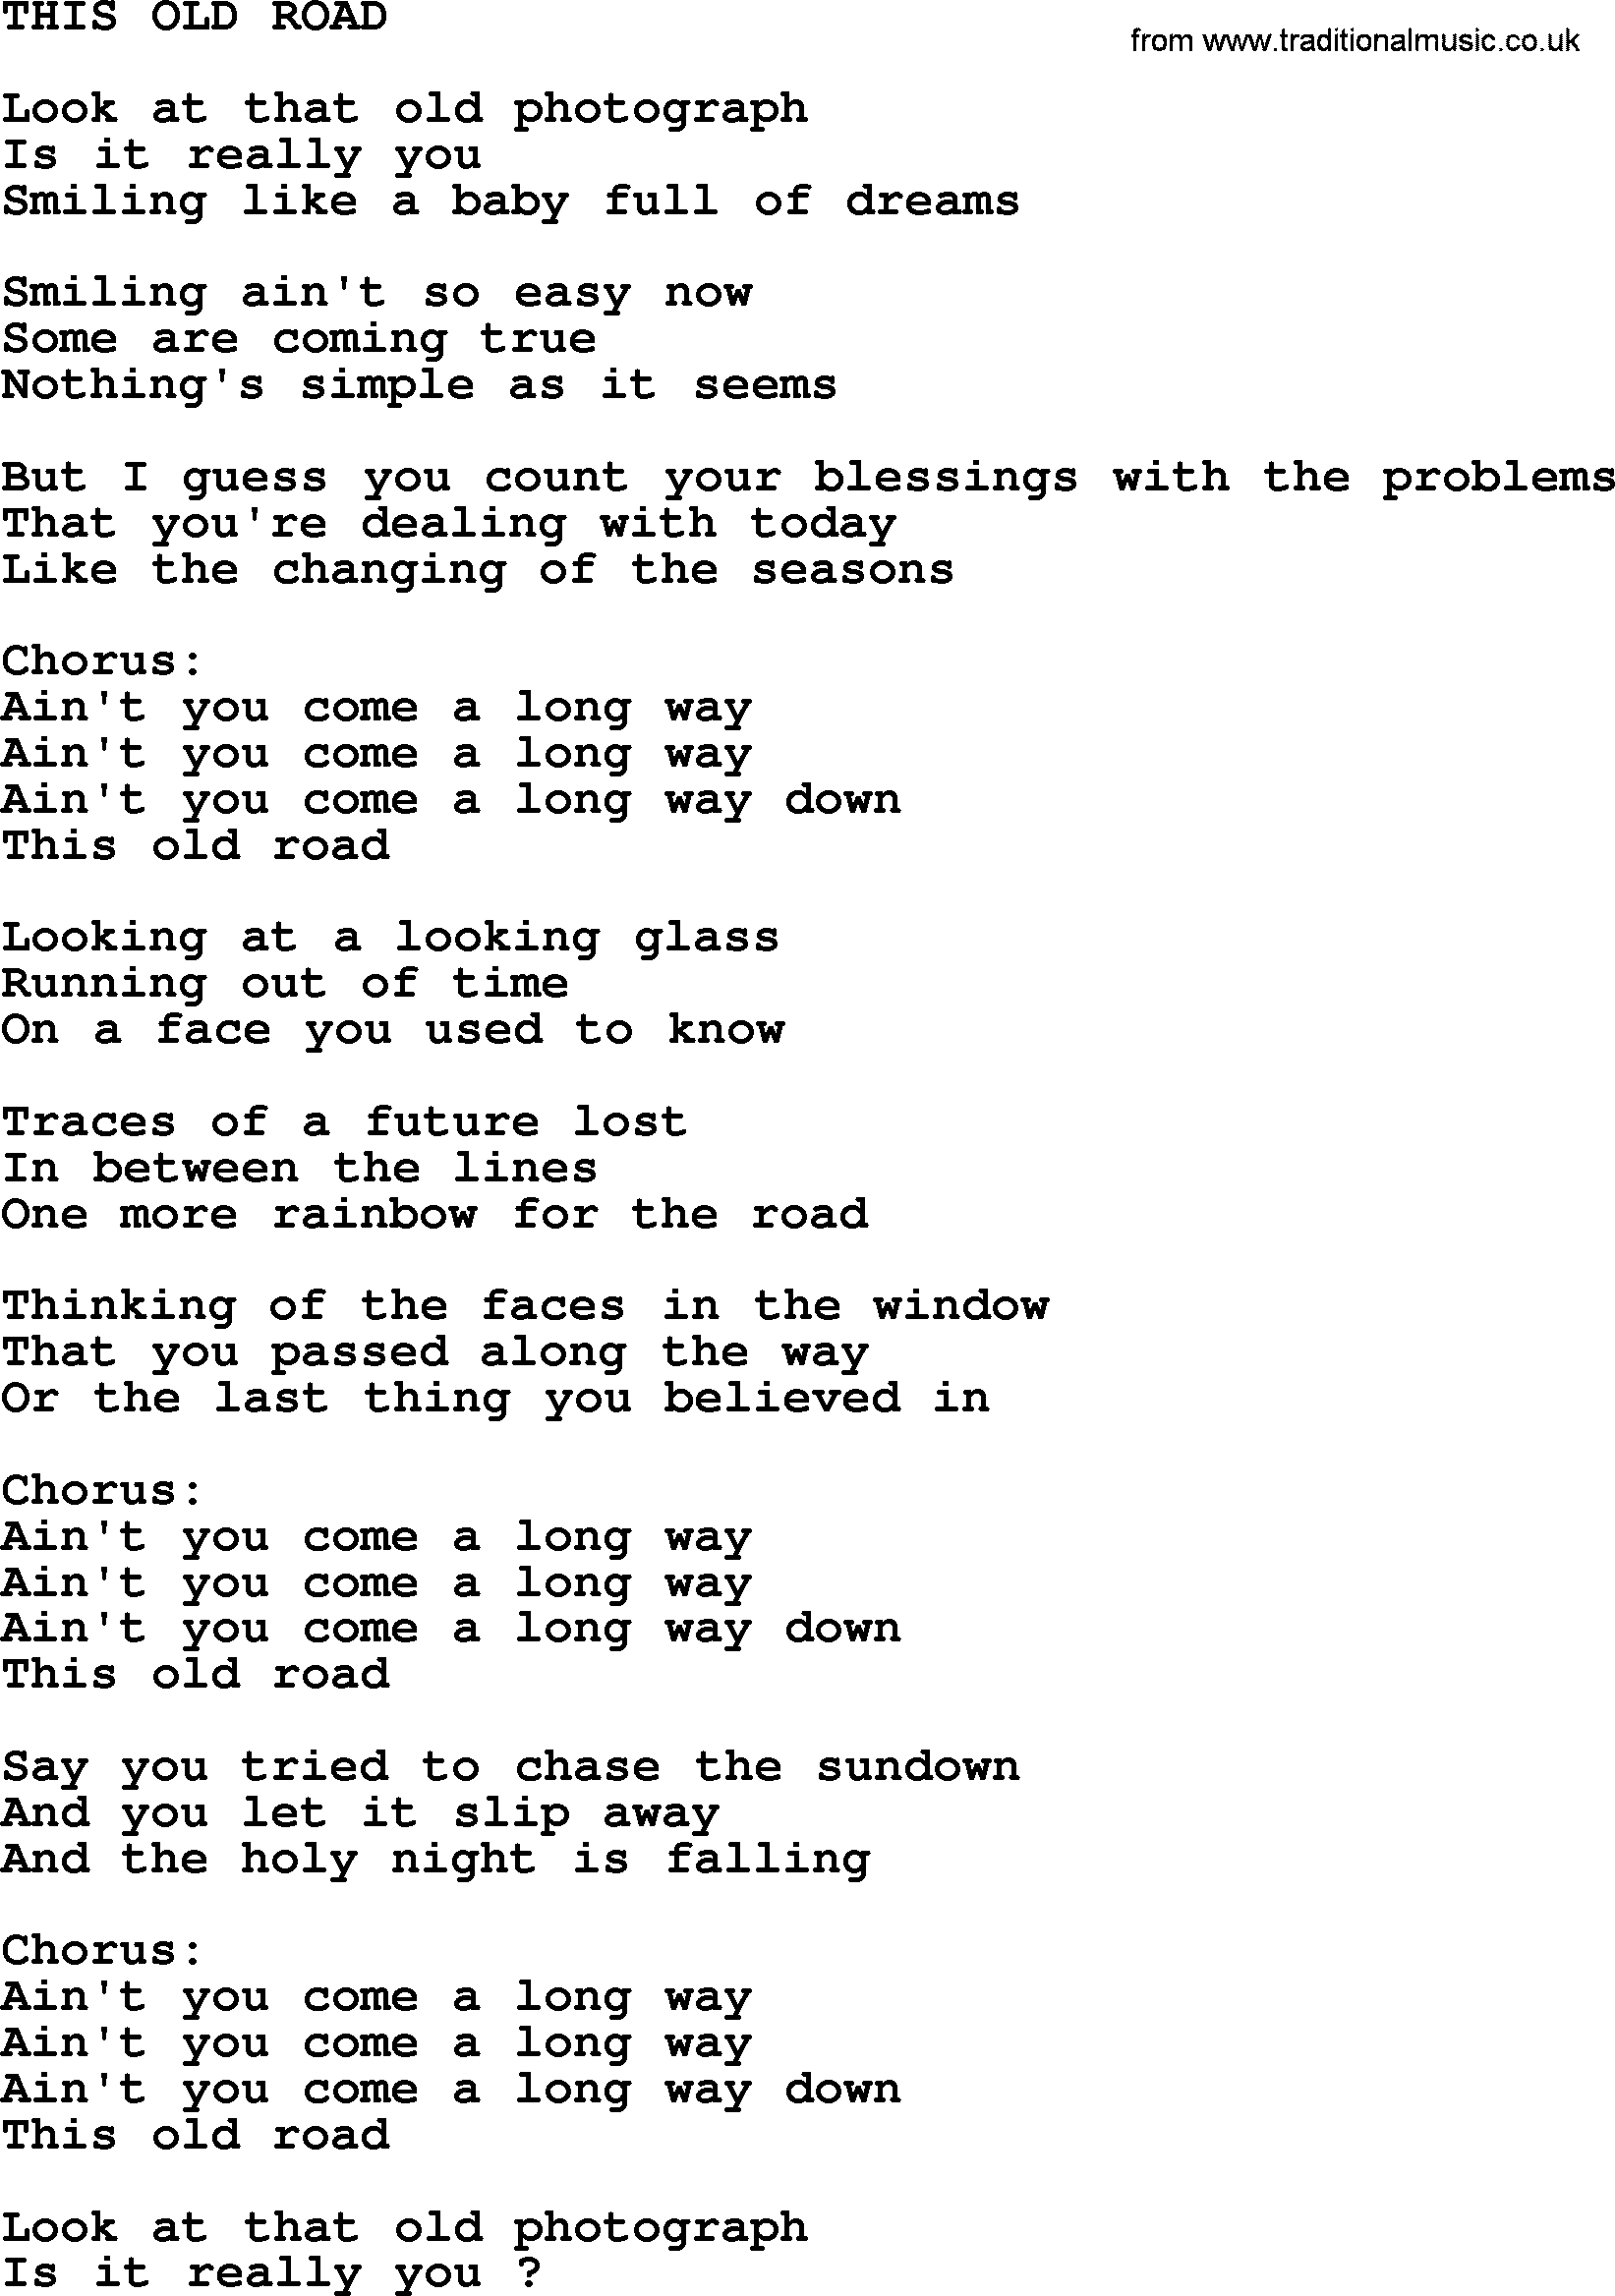 Kris Kristofferson song: This Old Road lyrics